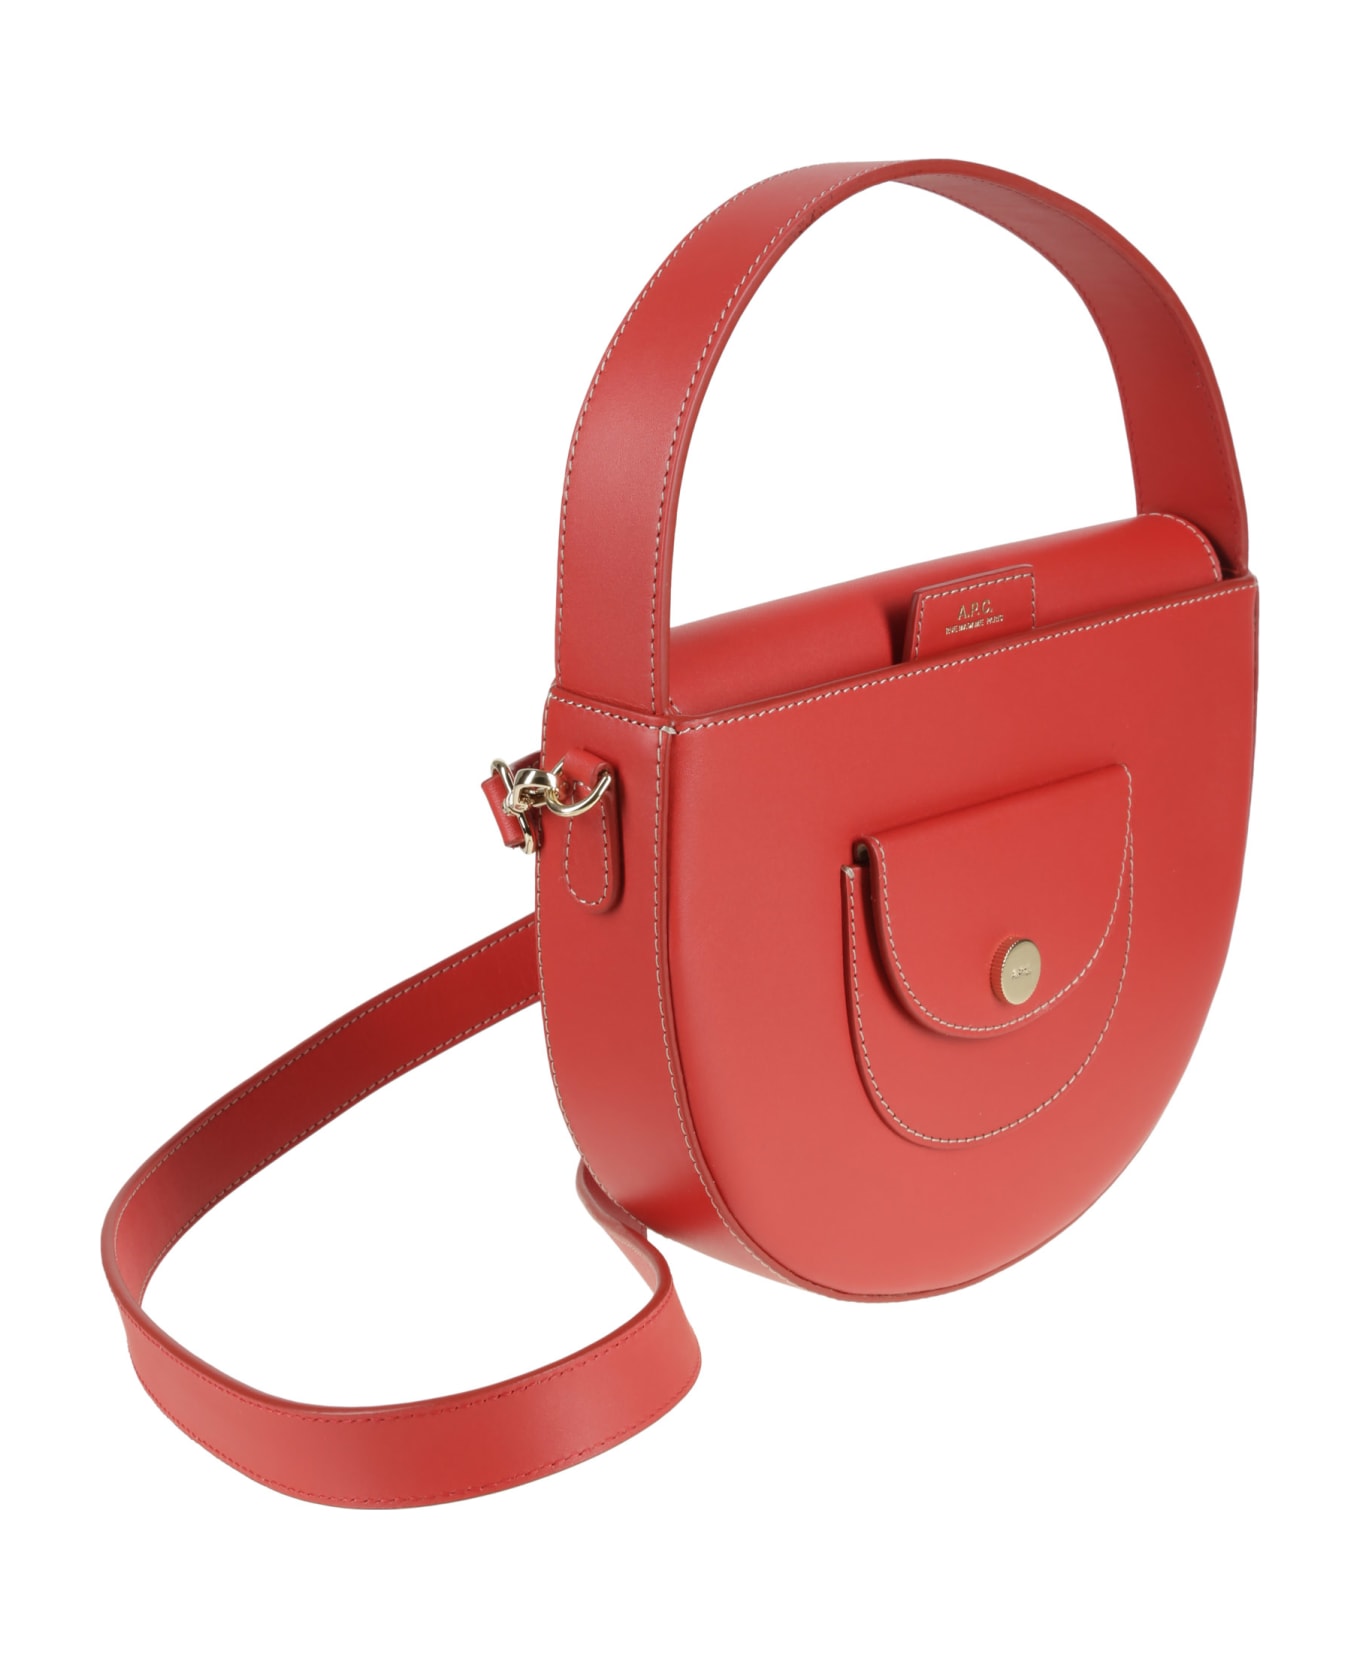 A.P.C. Sac Pocket Handbag - Gaa Red